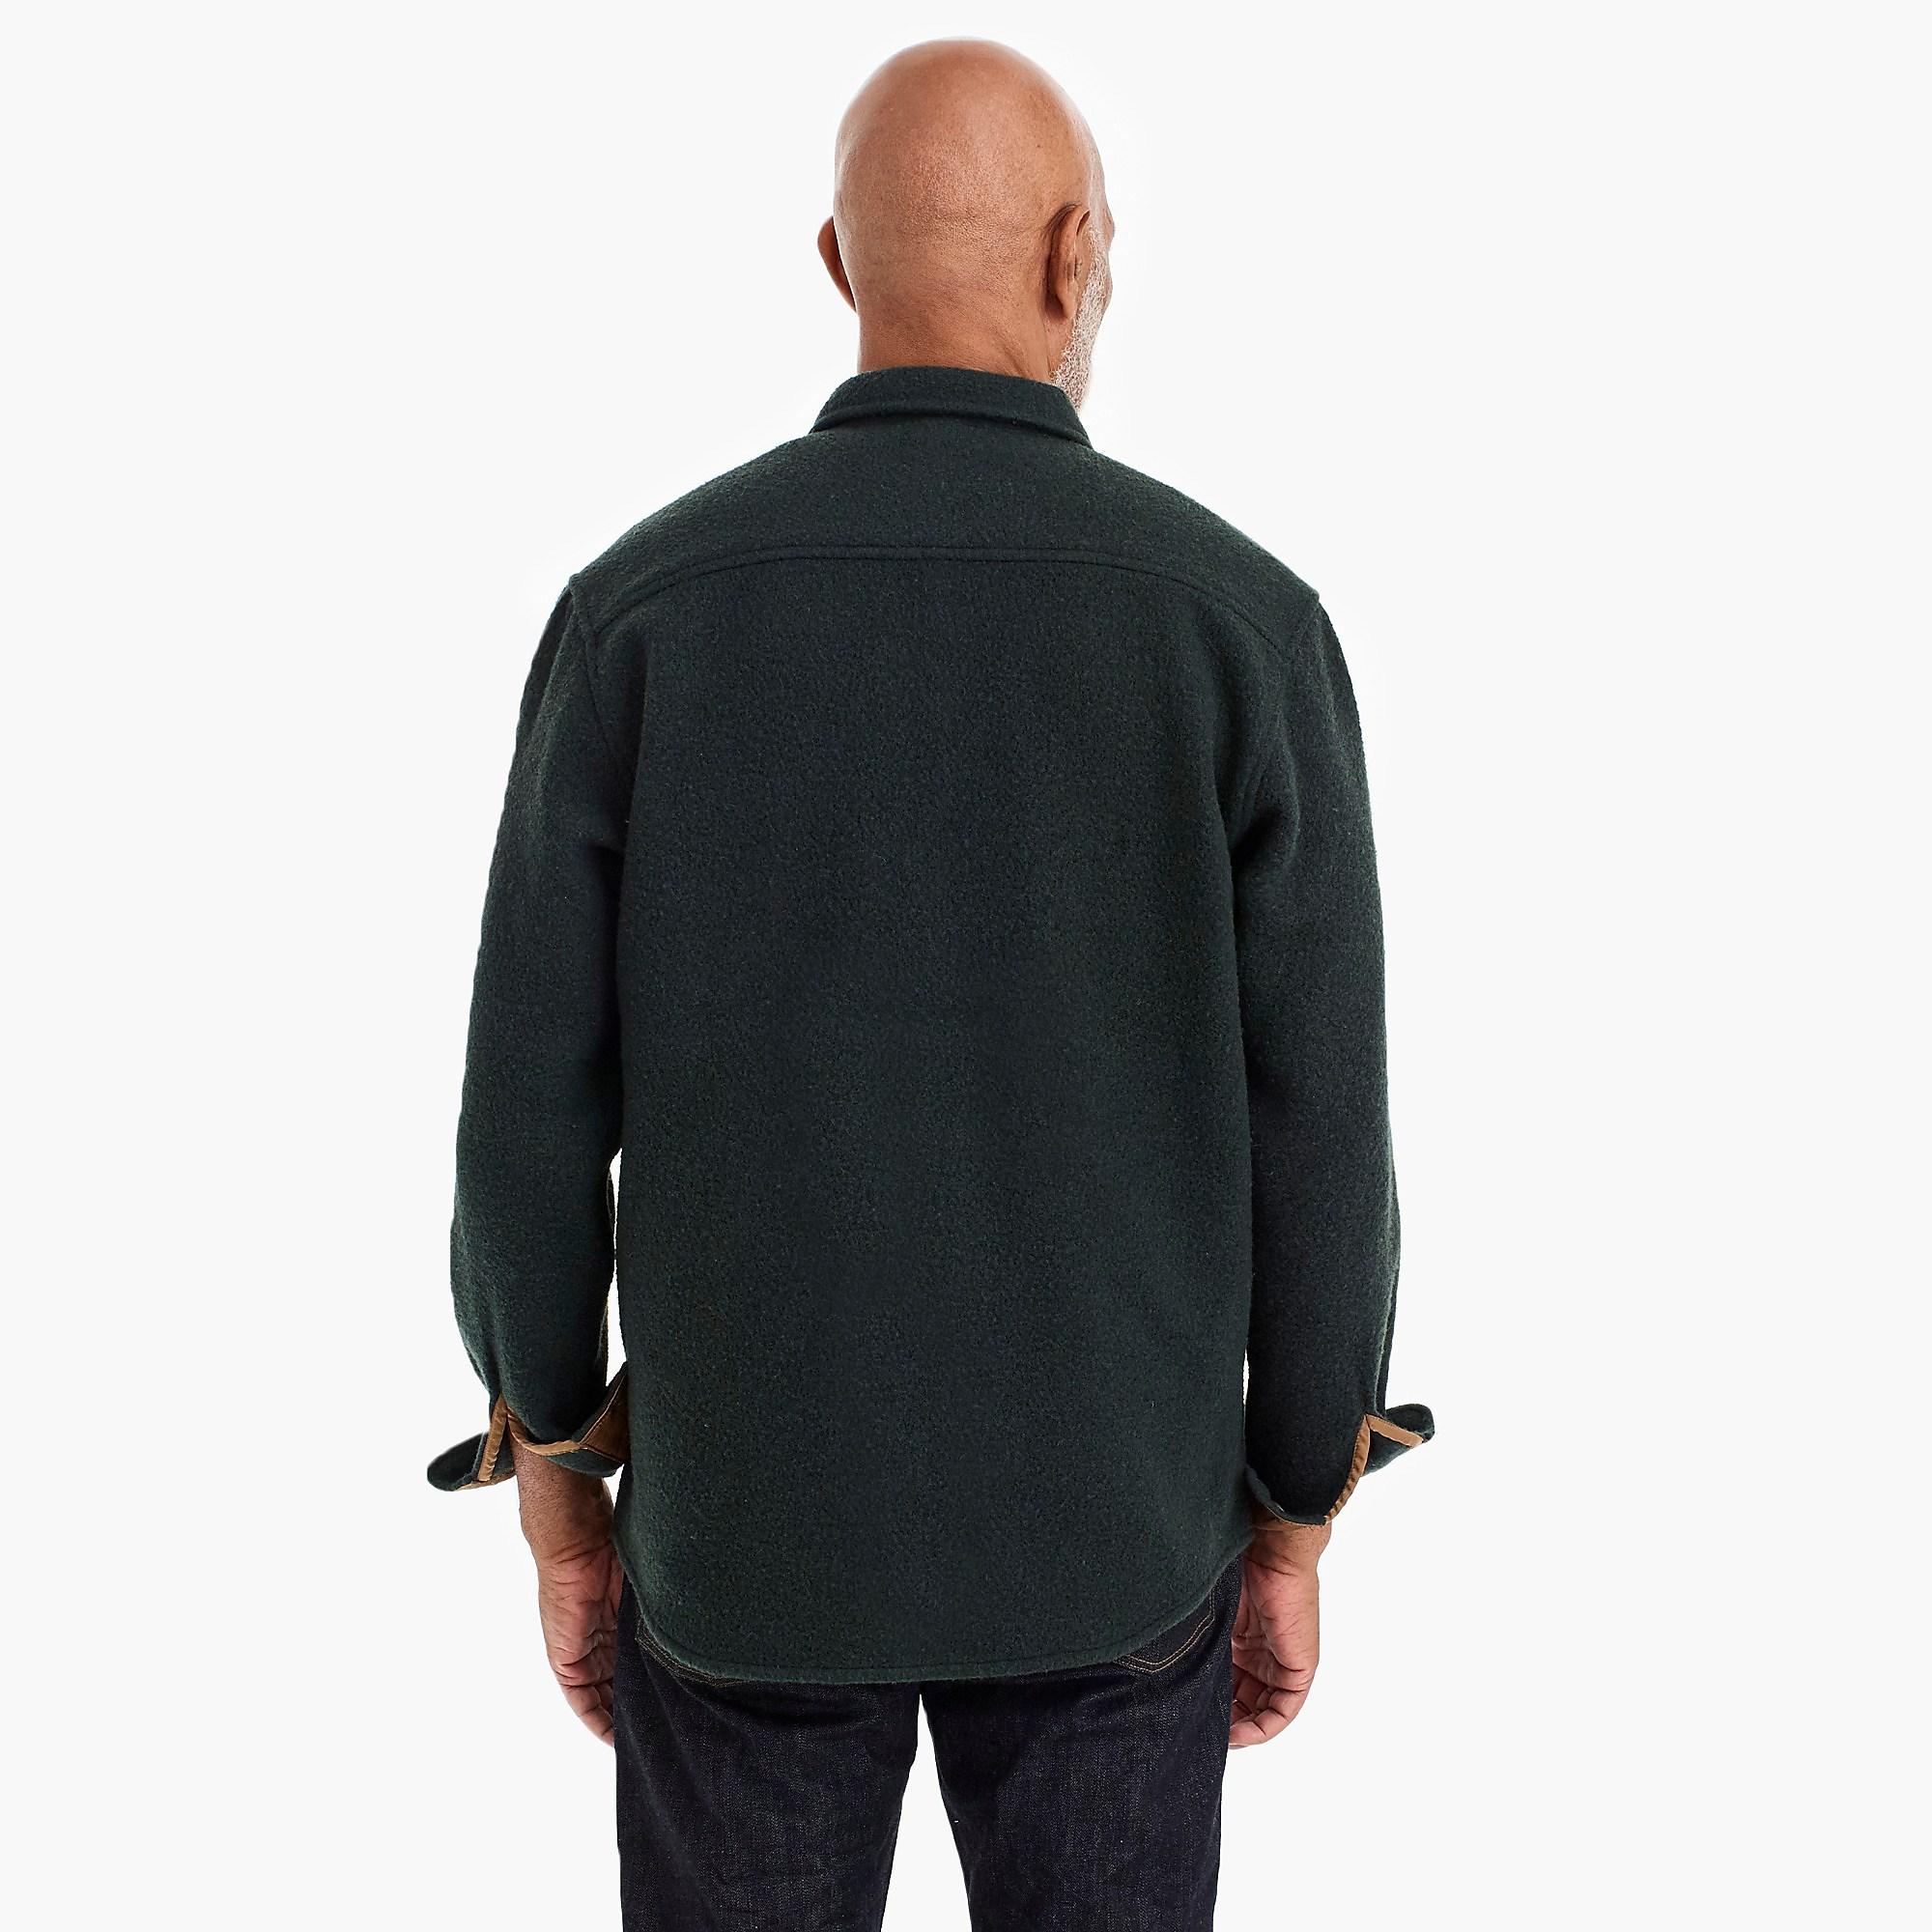 Carhartt Wool Milner Shirt Jacket in Black for Men - Lyst